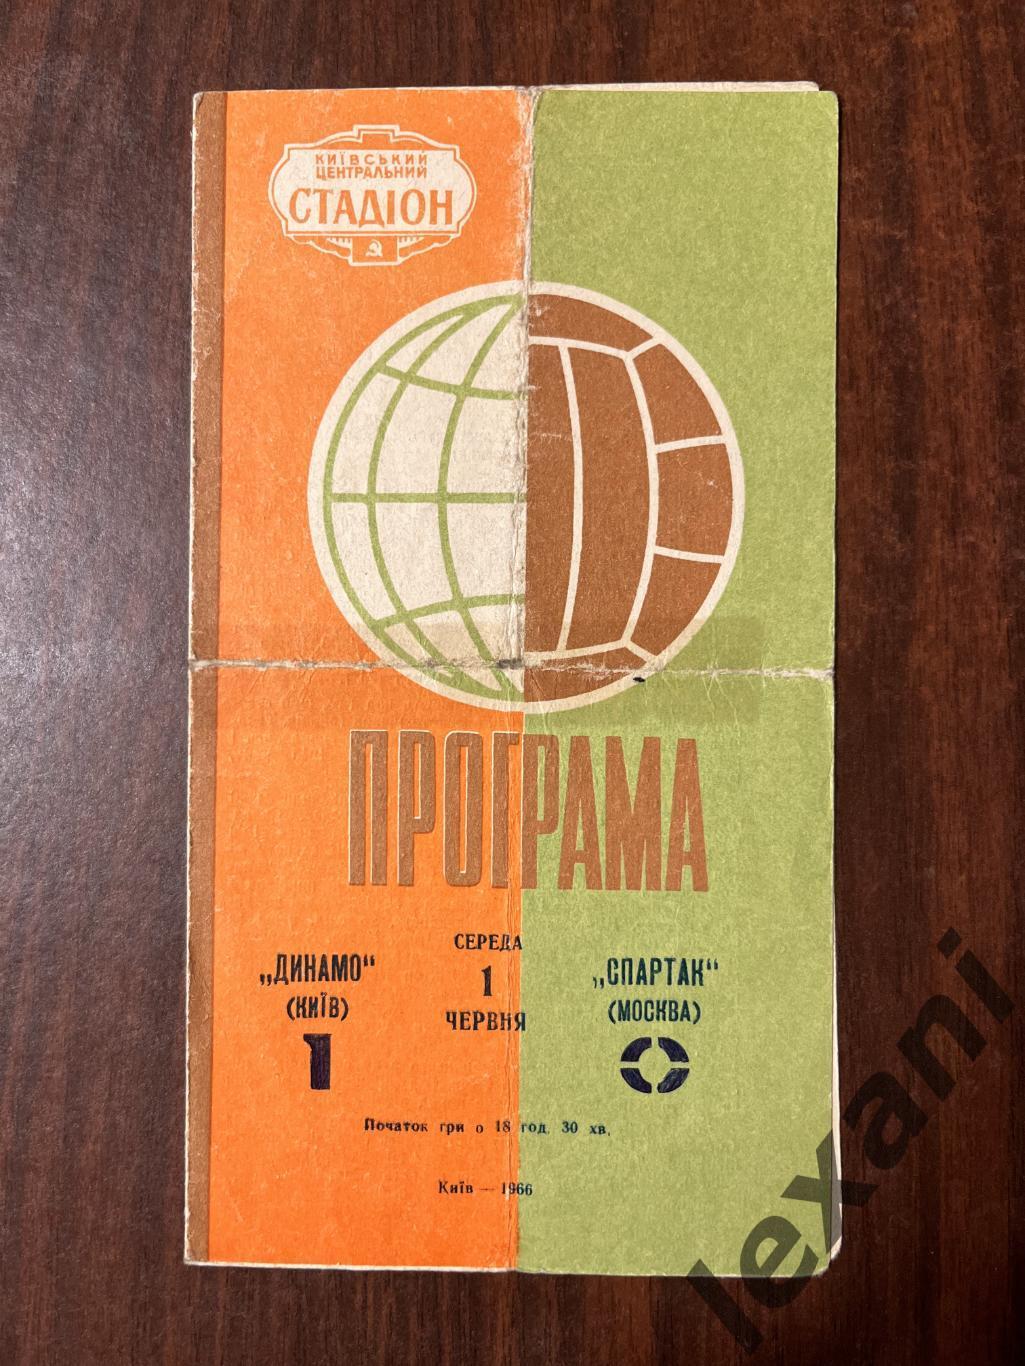 Динамо Киев- Спартак Москва 1 июня 1966